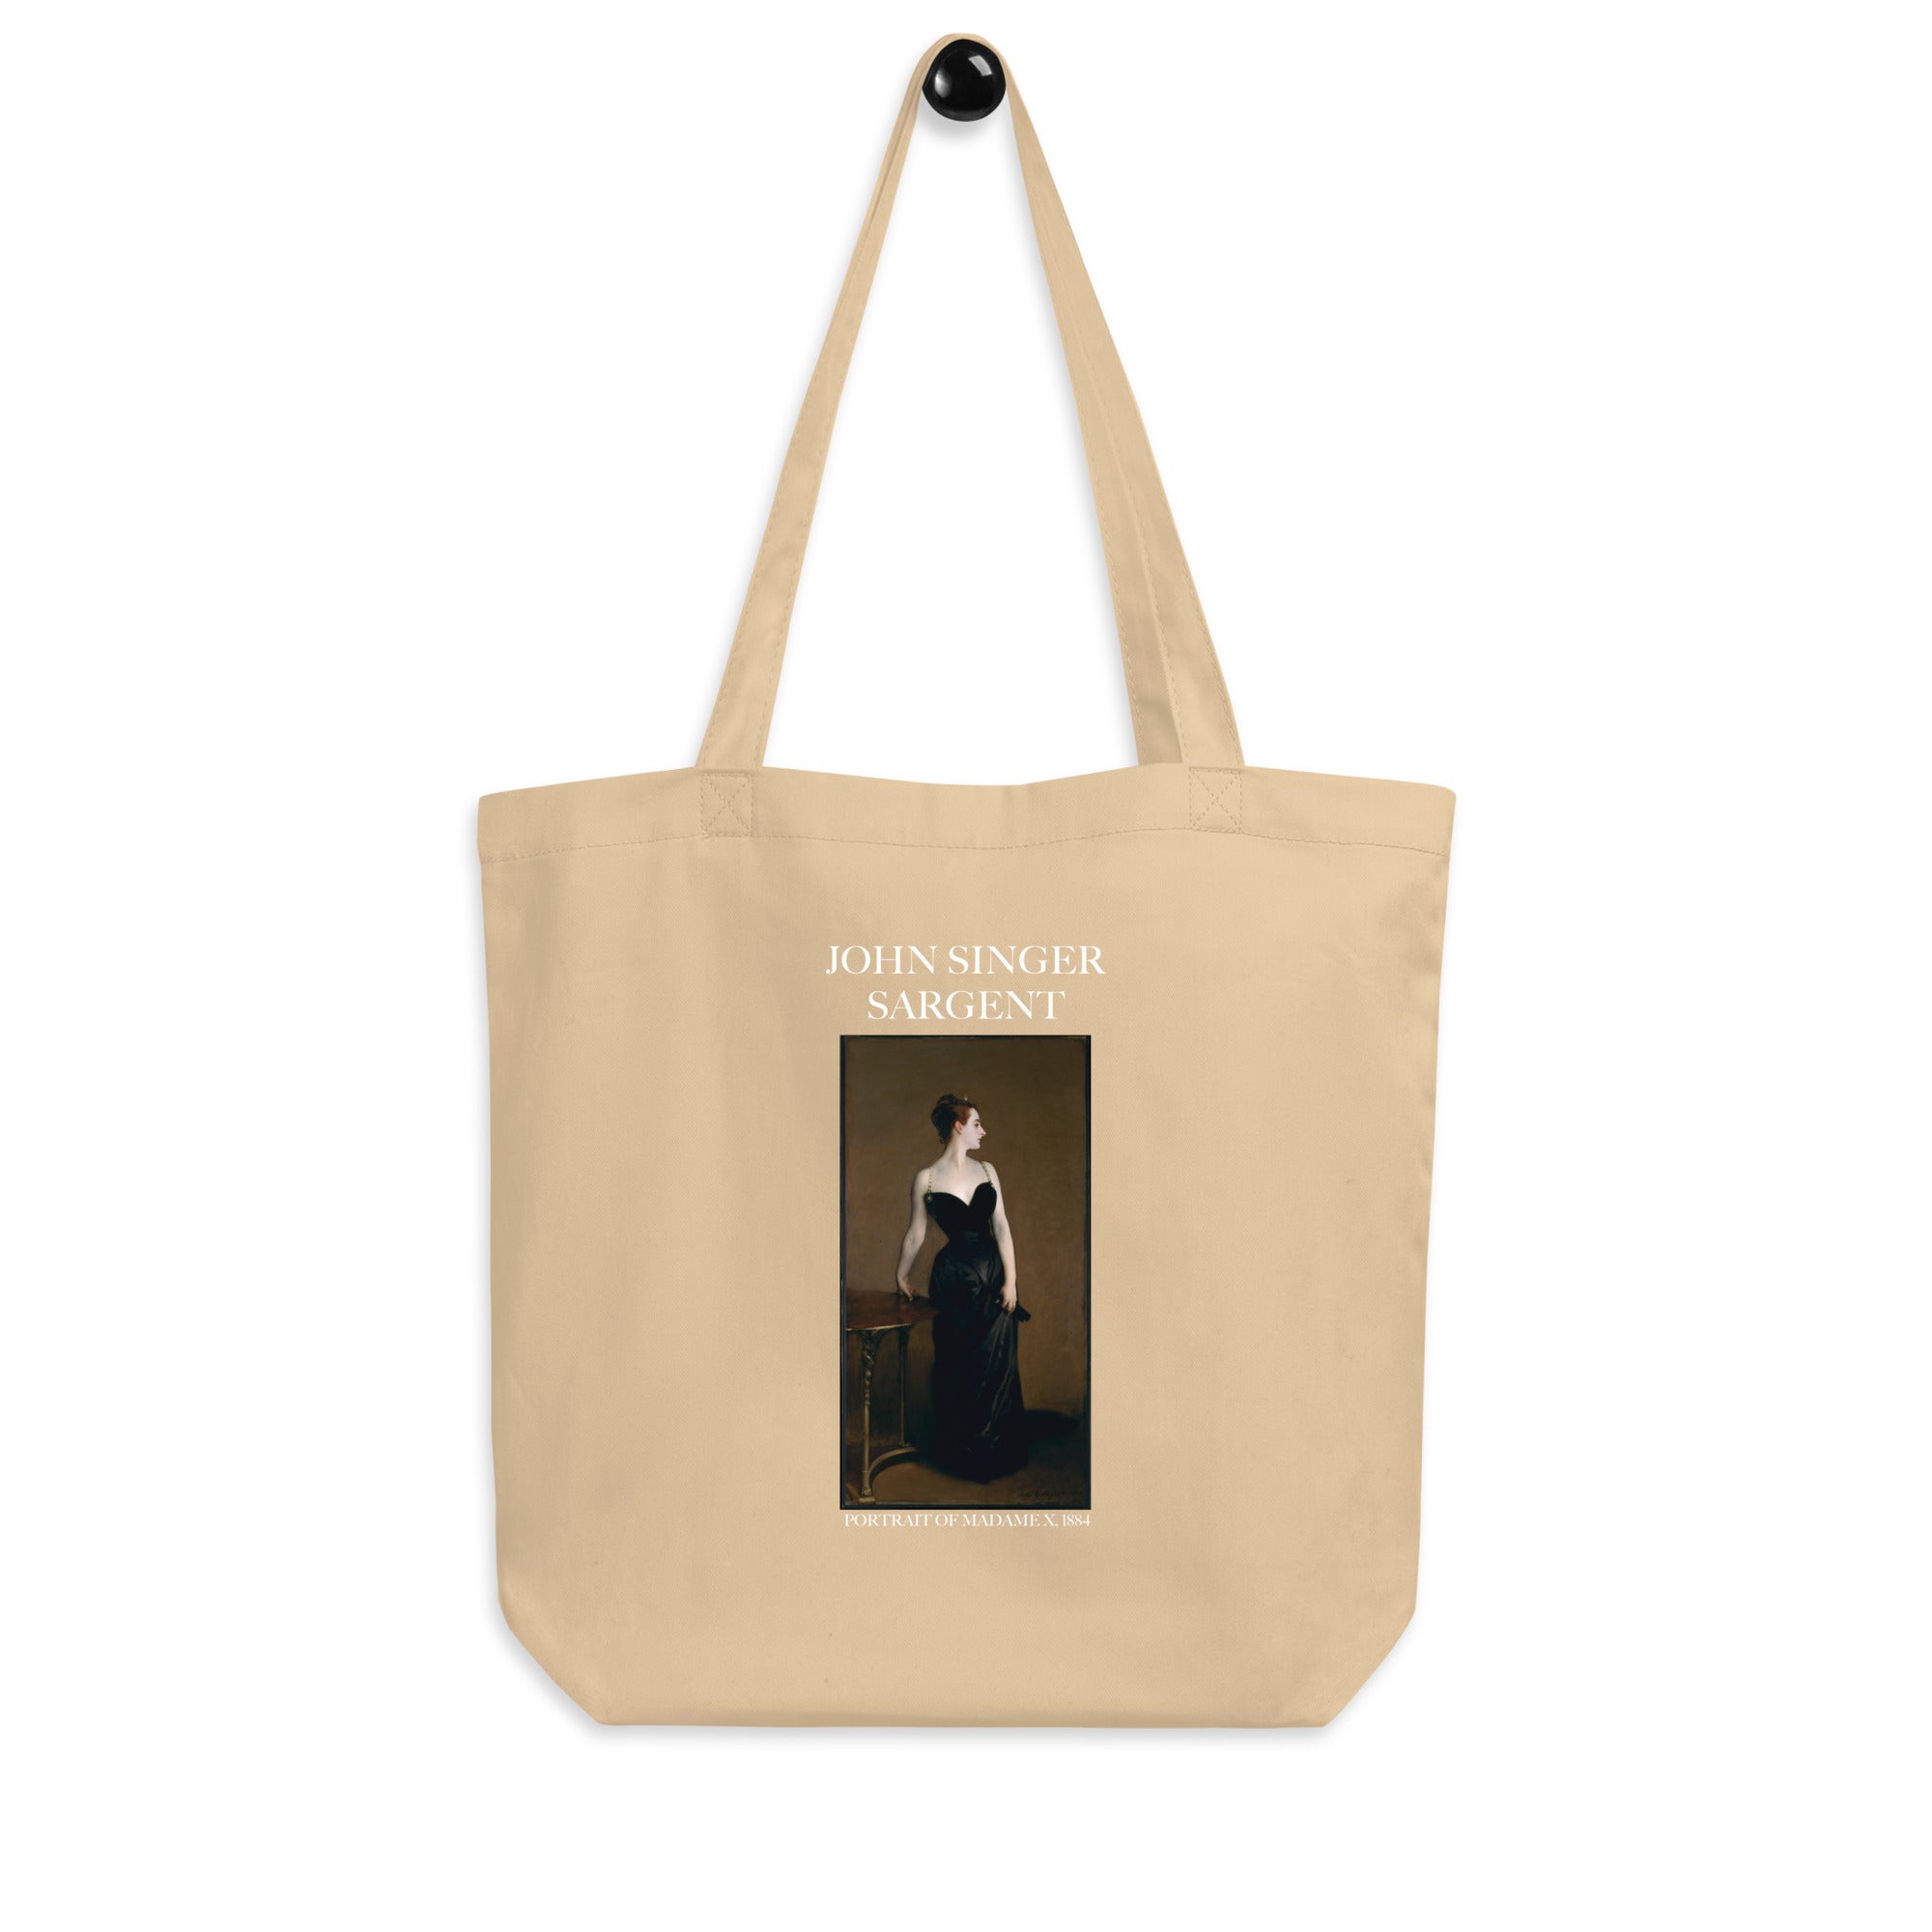 John Singer Sargent 'Portrait of Madame X' Famous Painting Totebag | Eco Friendly Art Tote Bag